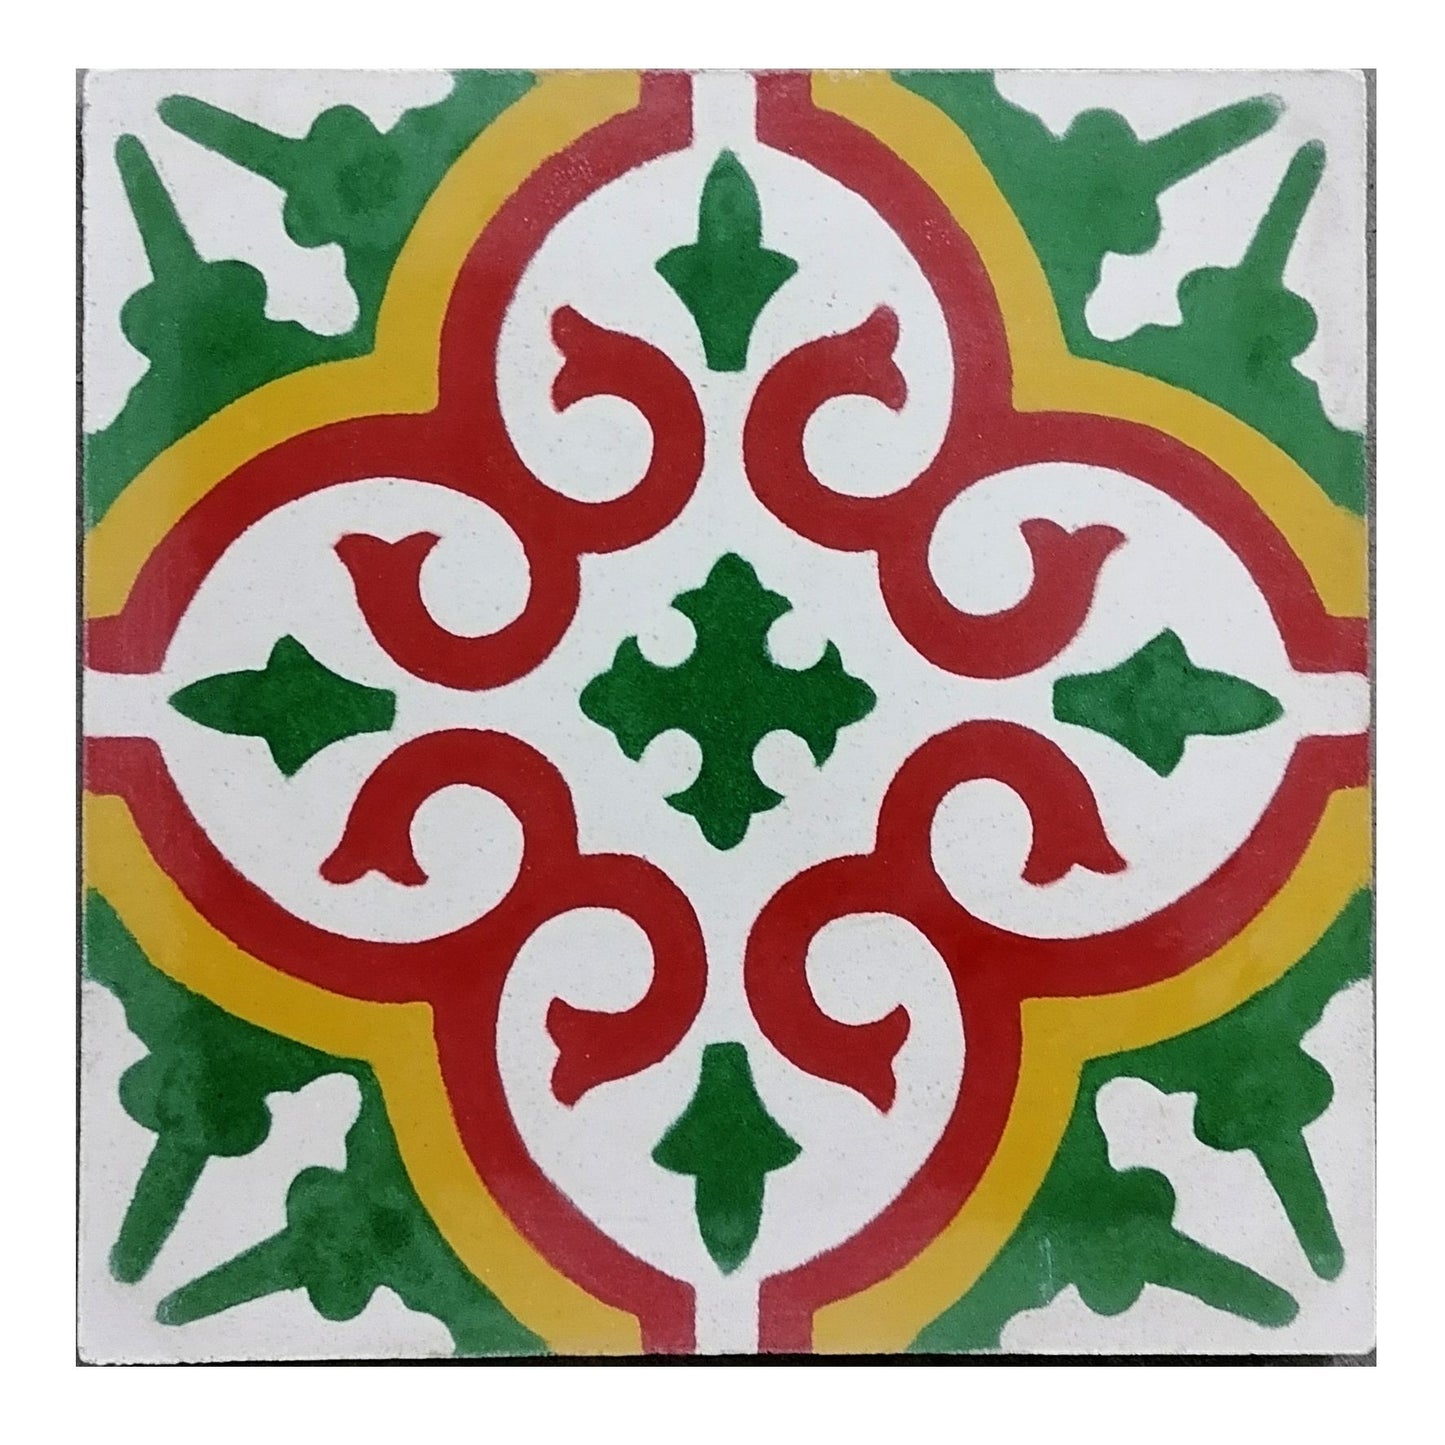 Etnisch Meubilair Marokkaans Cementine Marokko Tegels Tegels 20x20 001